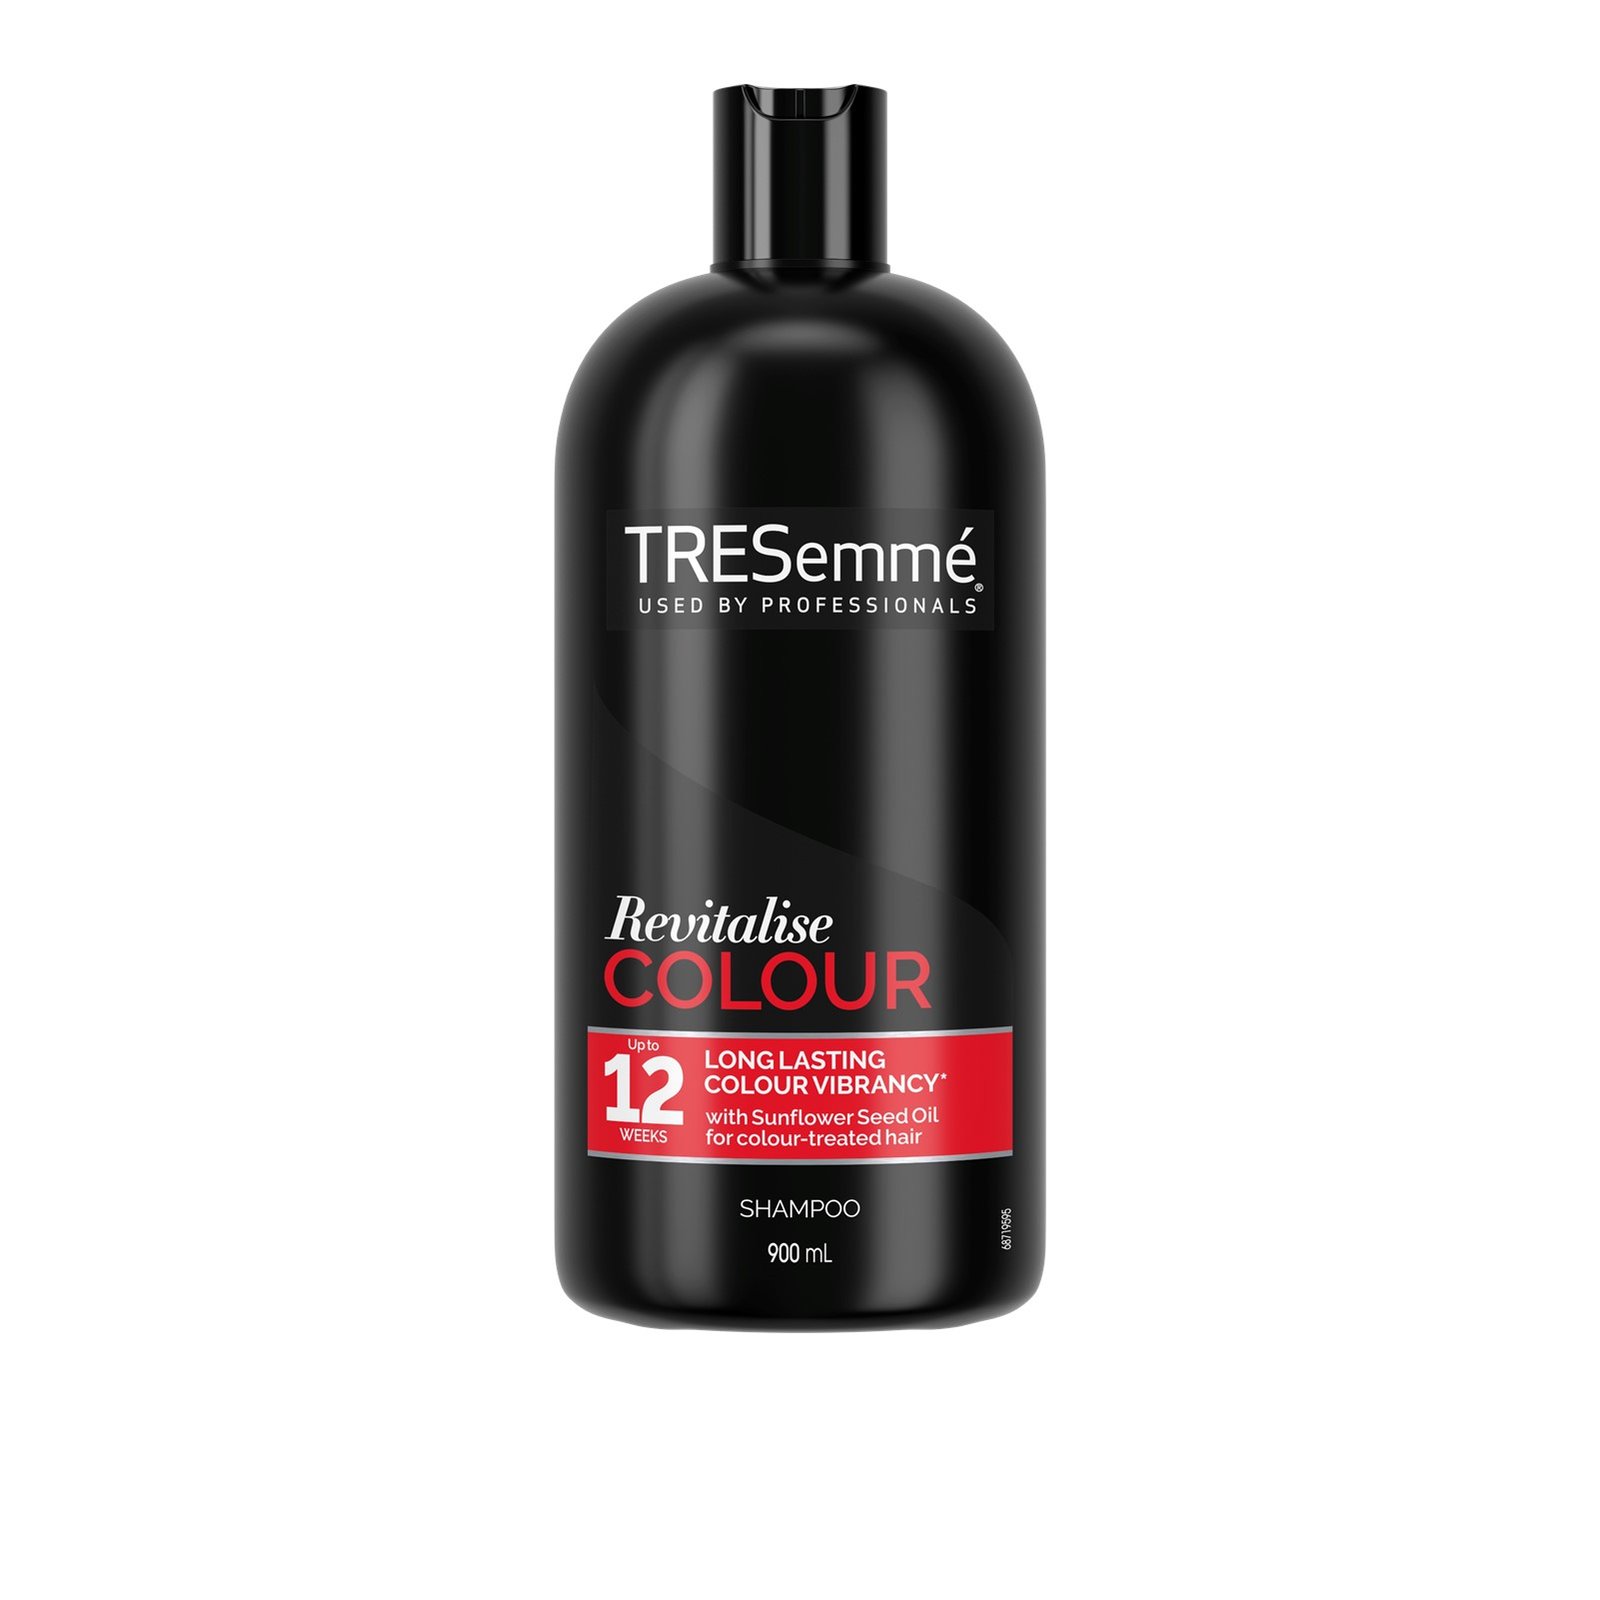 TRESemmé Revitalise Colour Shampoo 900ml (30.43 fl oz)